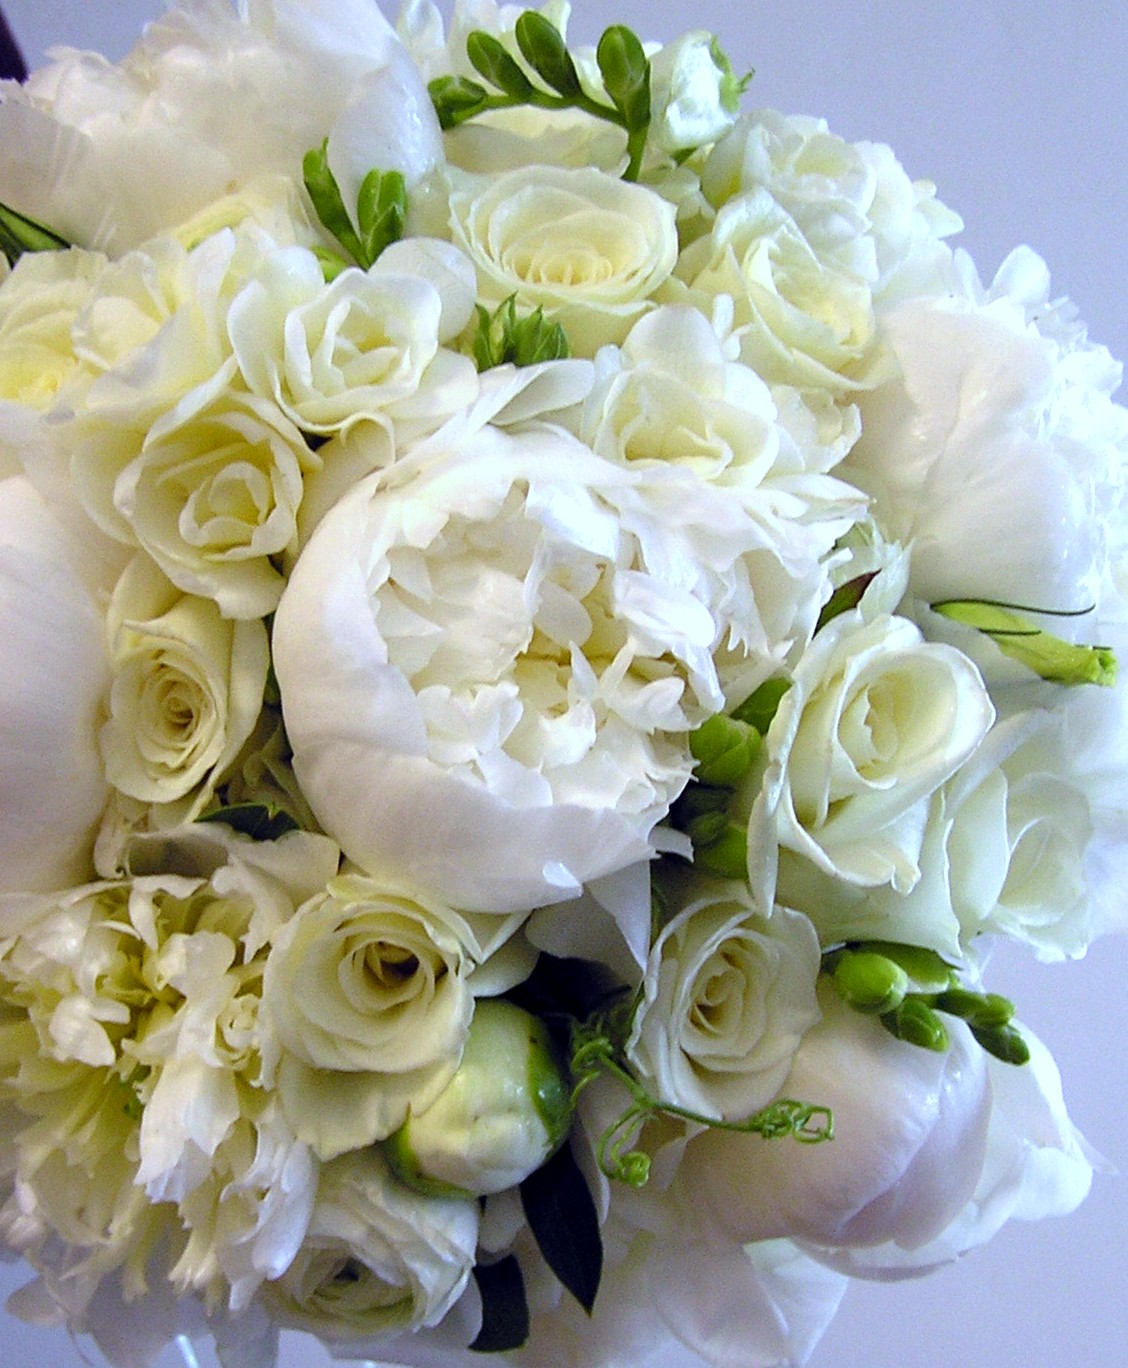 White peony bouquet